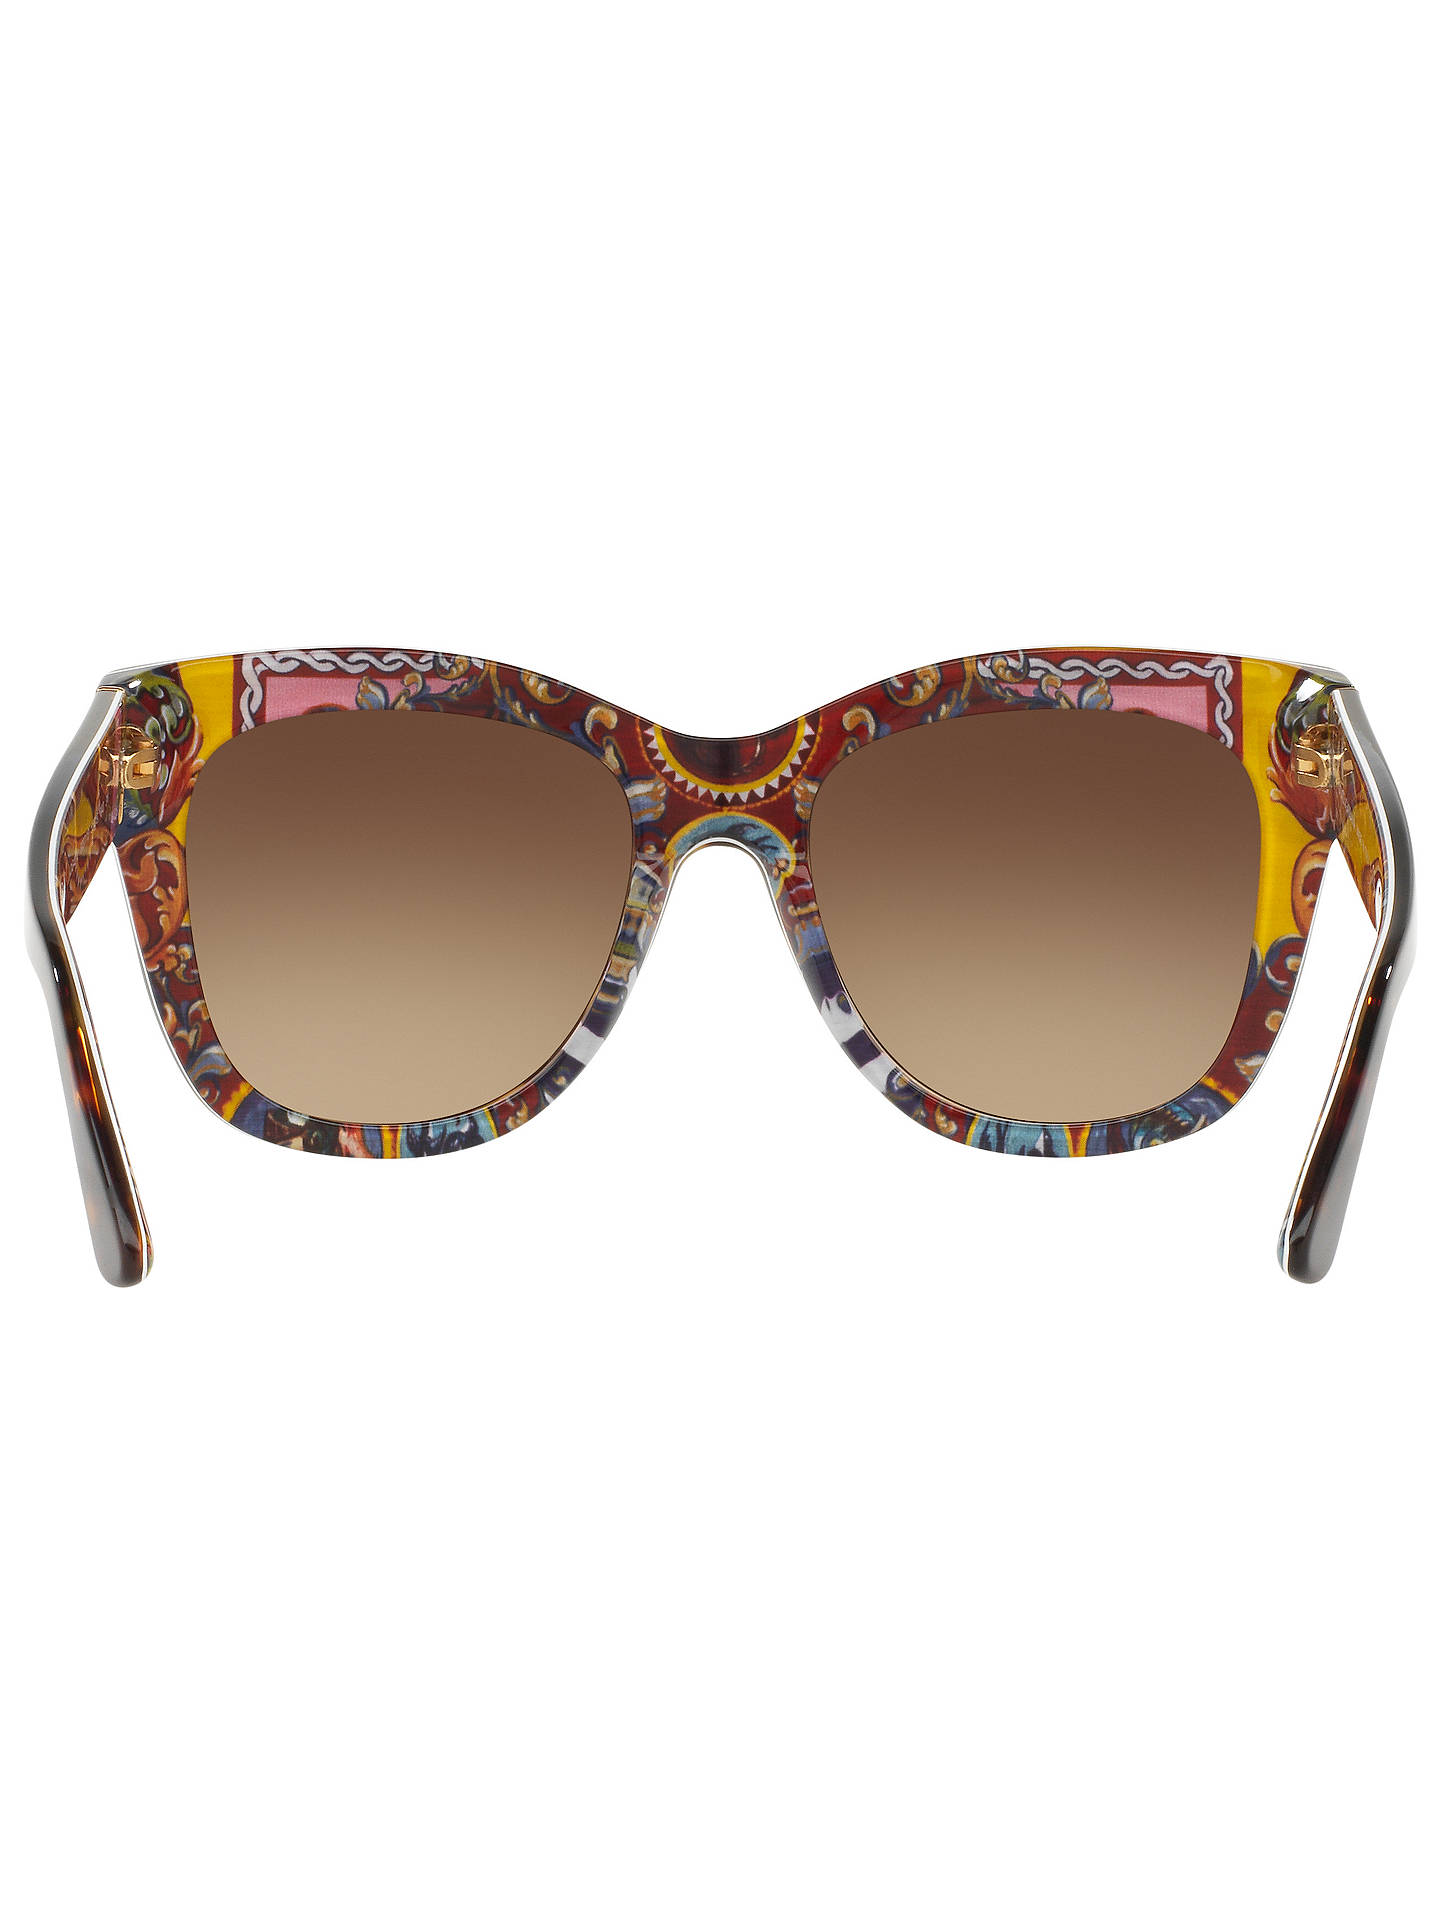 Dolce & Gabbana DG4270 Women's Square Sunglasses at John Lewis & Partners